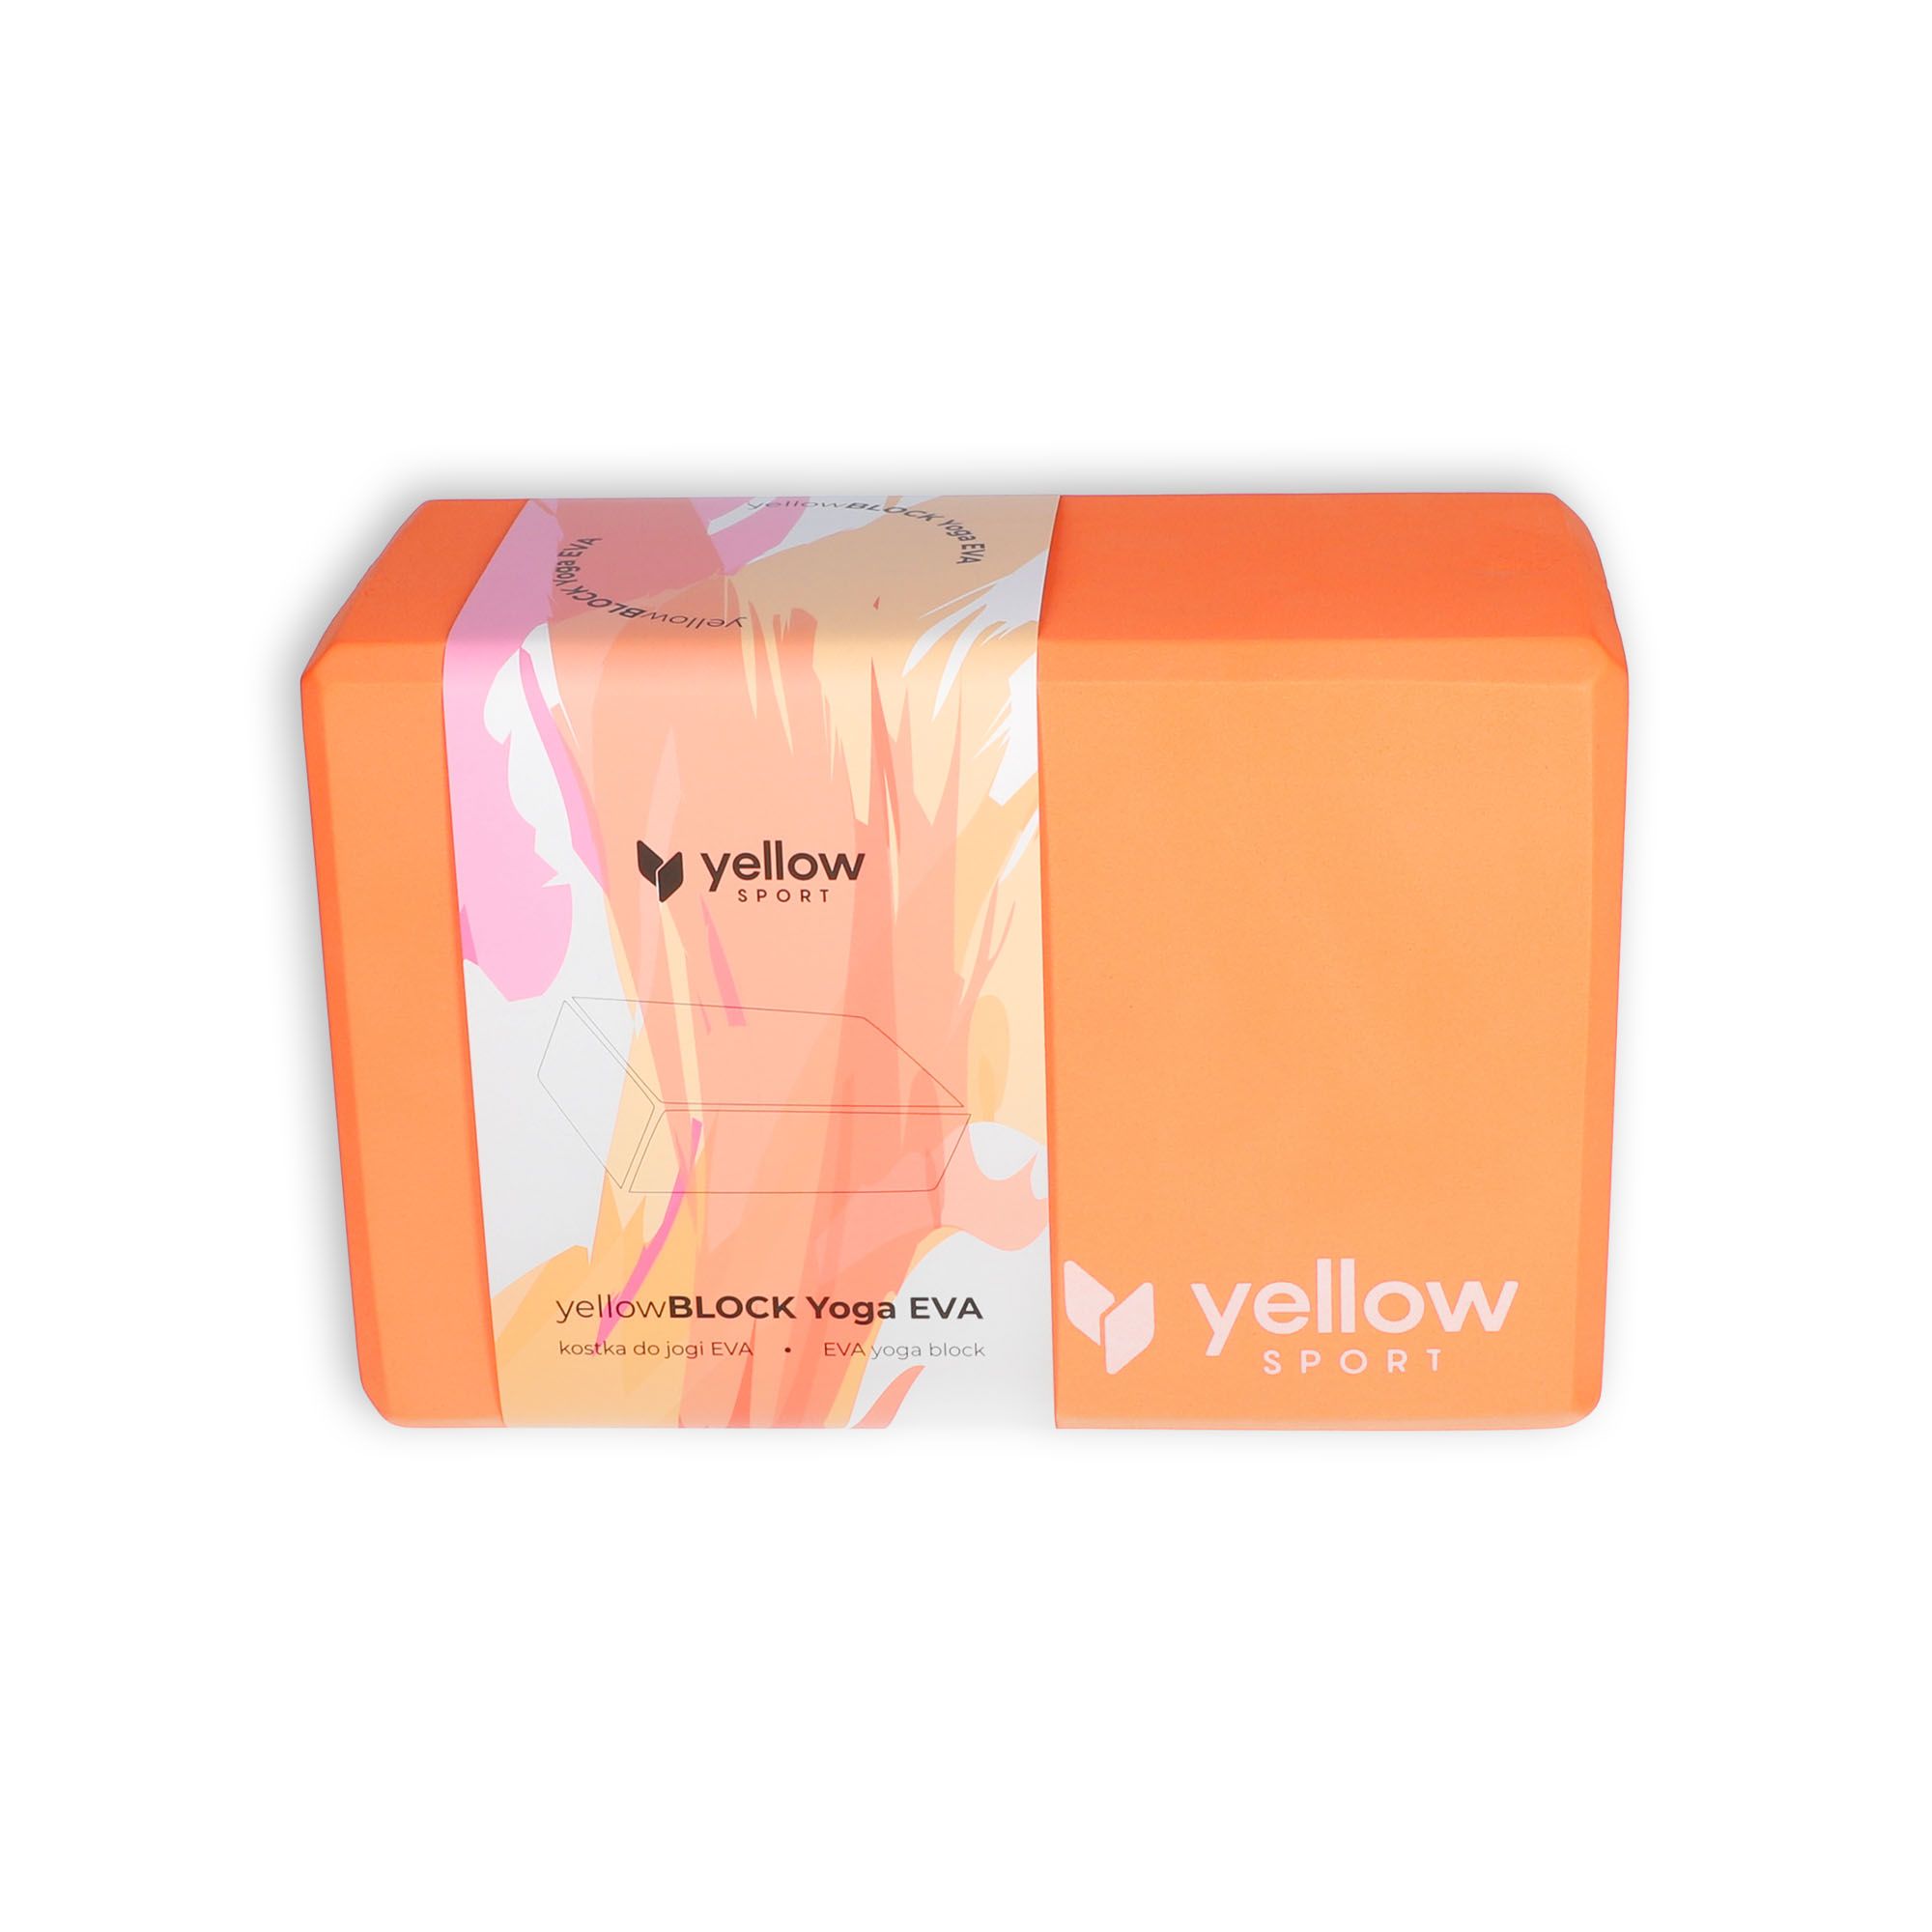 Kostka do jogi yellowBLOCK Yoga EVA, pomarańczowa - akcesoria do jogi 